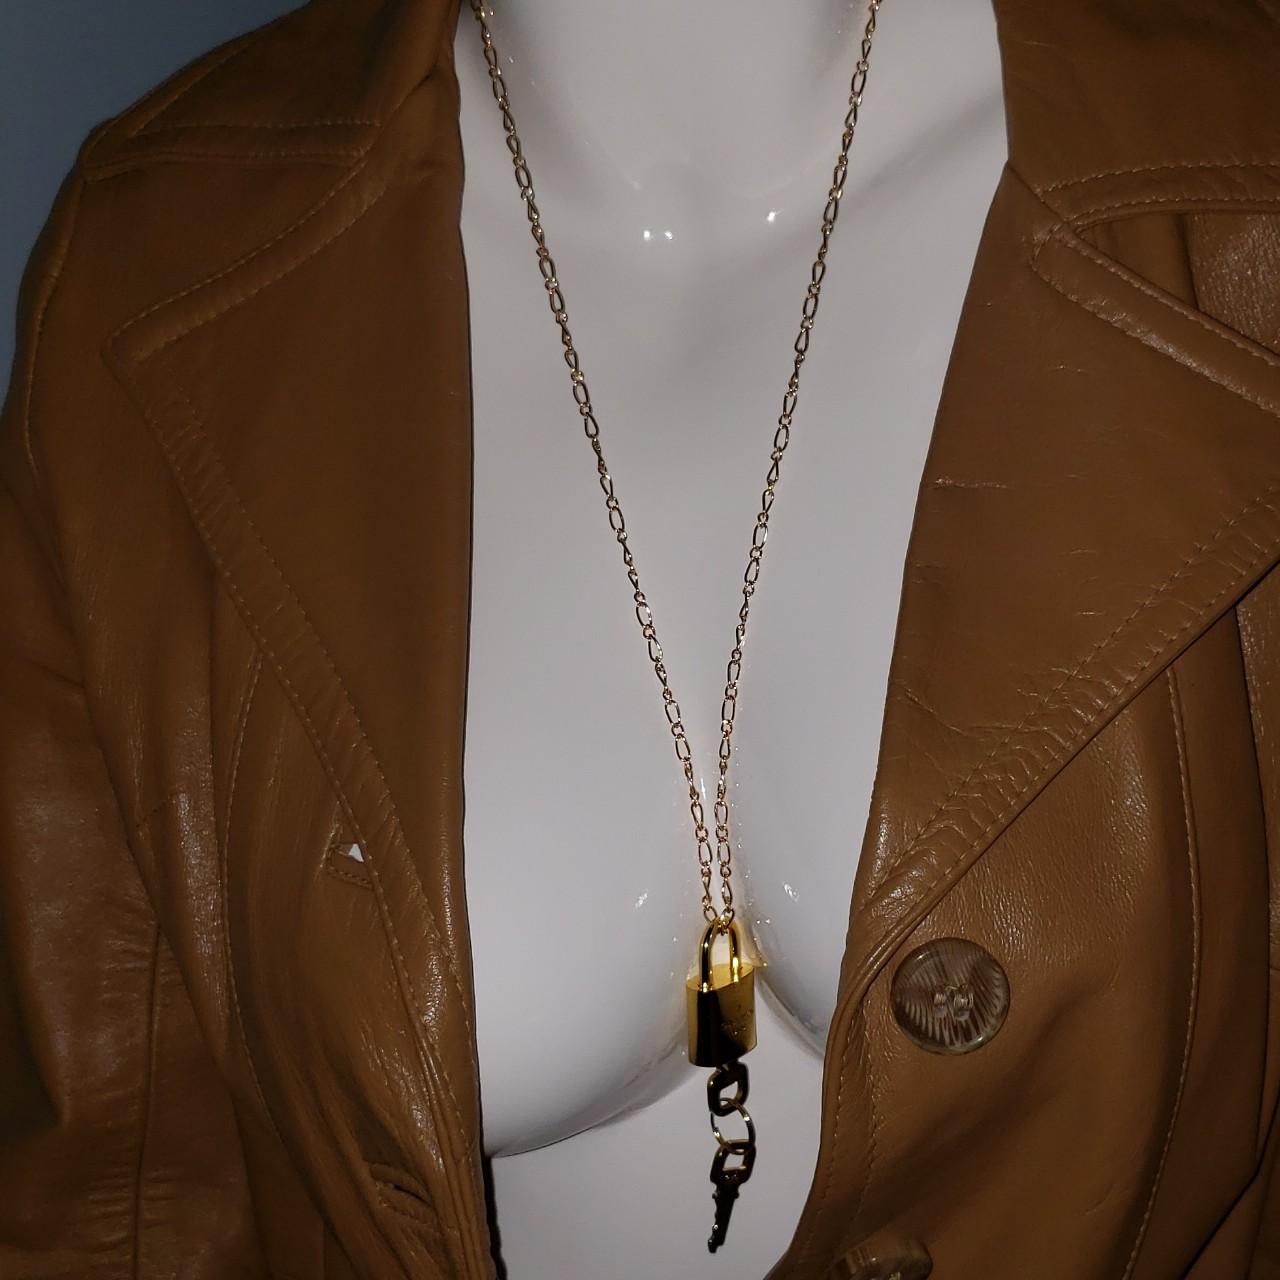 Louis Vuitton key & lock Super cute accessory - - Depop